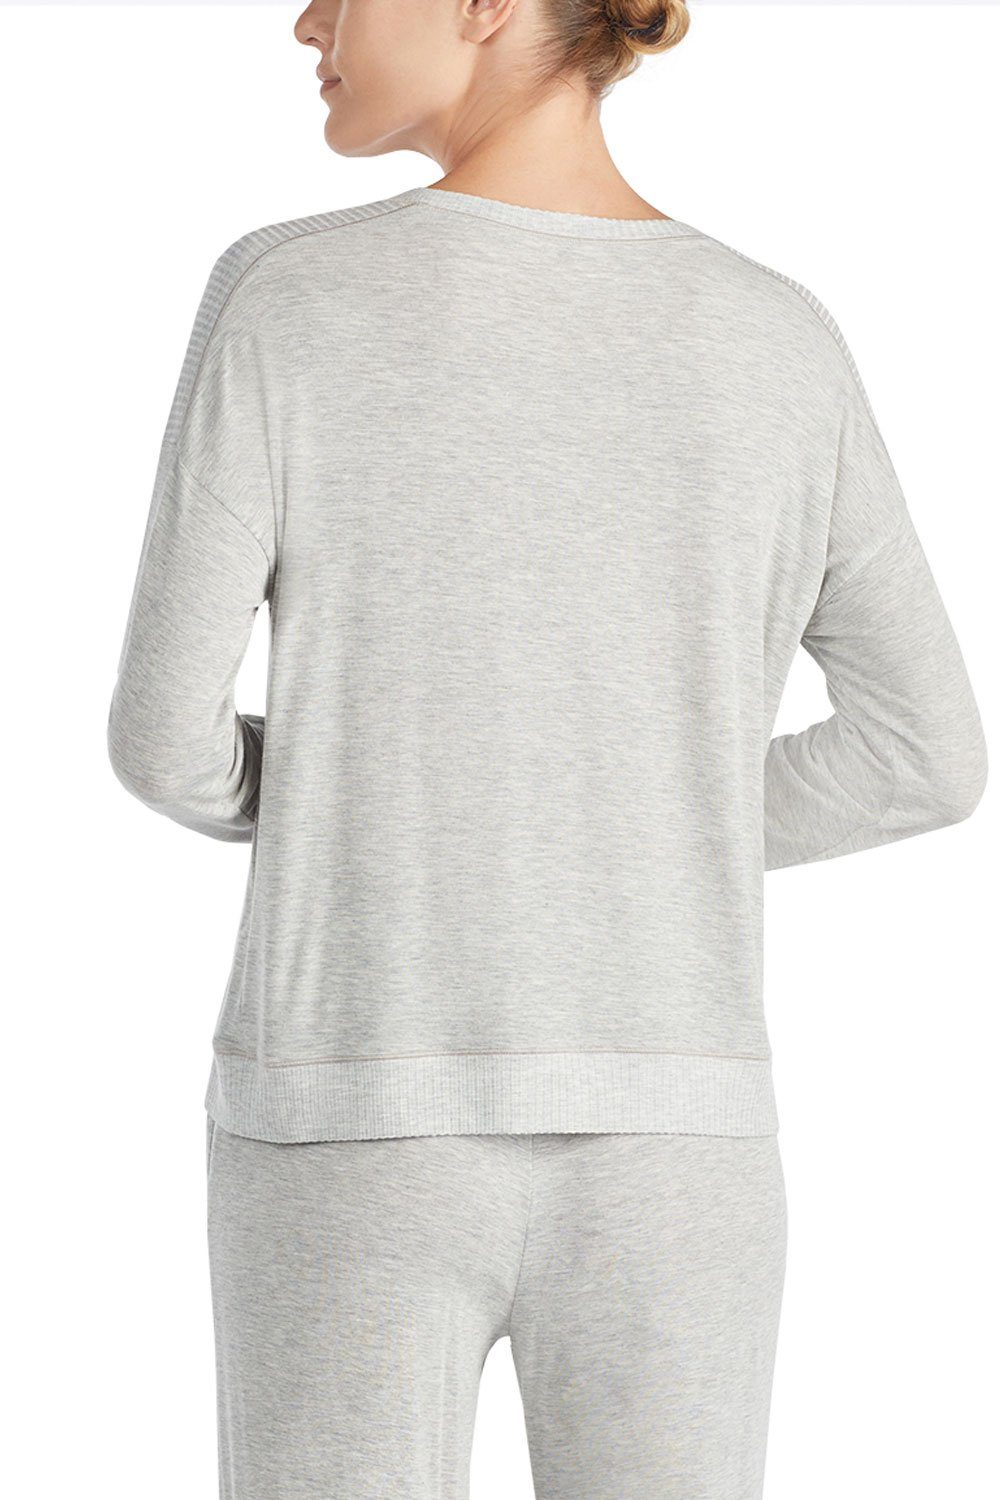 Essentials Sleepshirt heather YI3419330 grey Top DKNY light